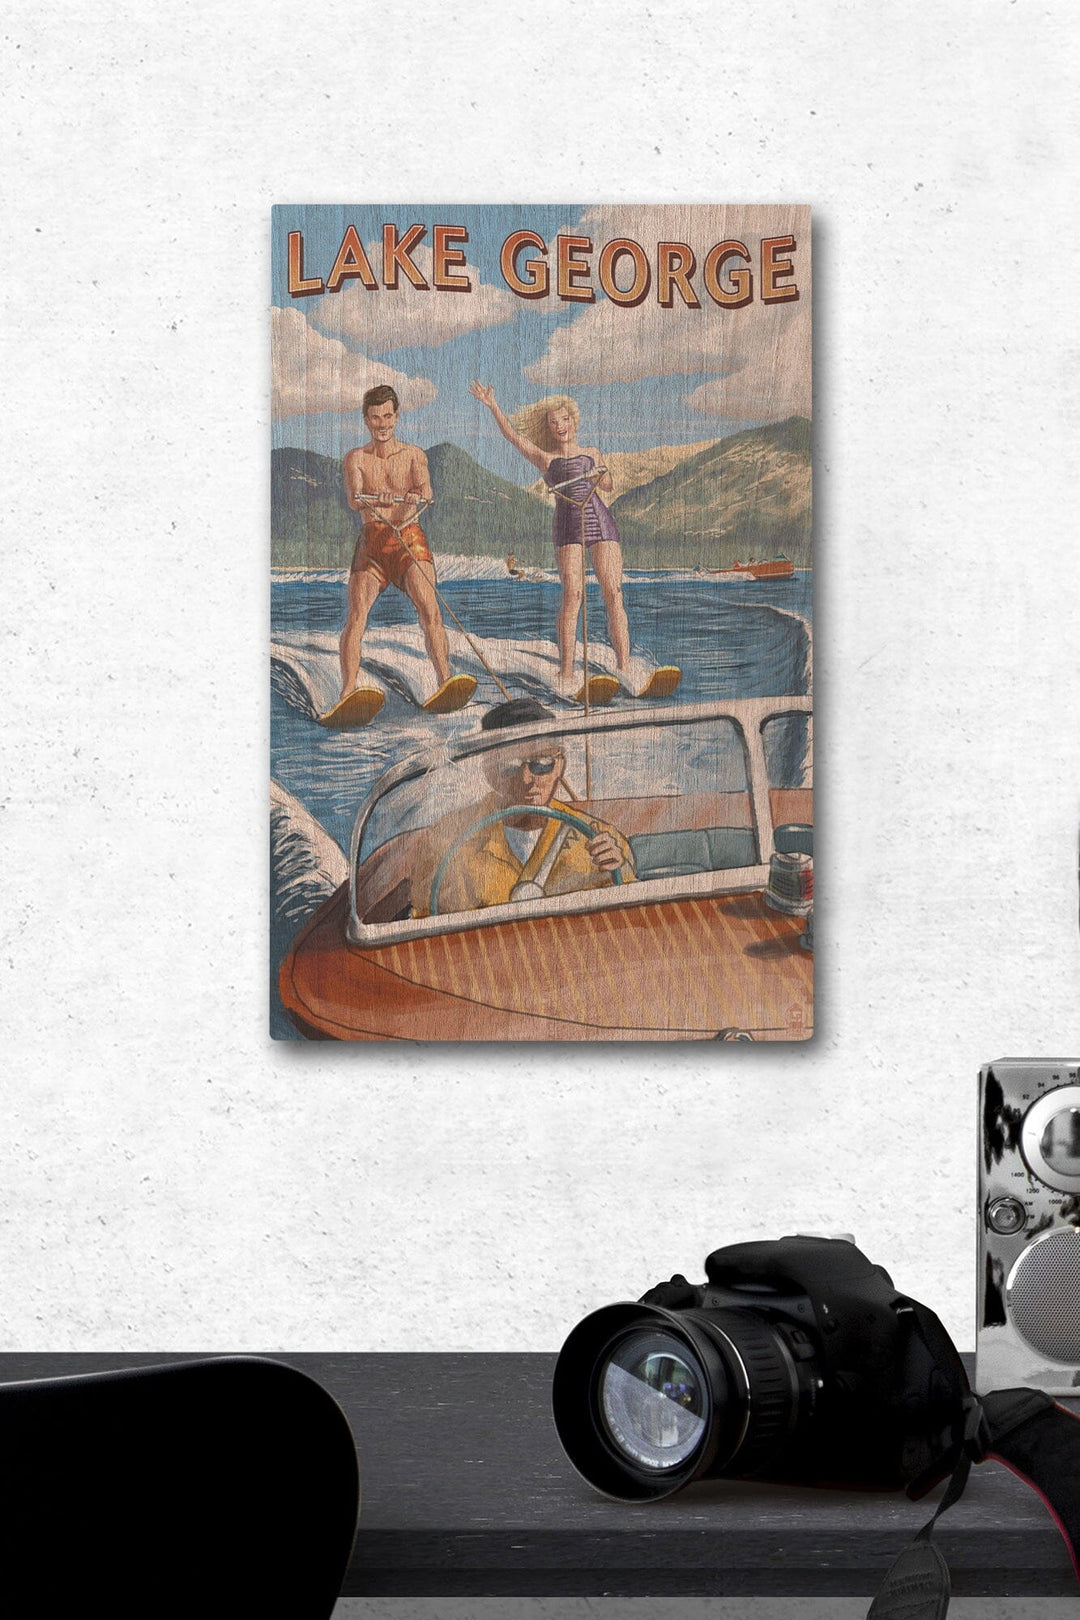 Lake George, New York, Water Skiing Scene, Lantern Press Artwork, Wood Signs and Postcards Wood Lantern Press 12 x 18 Wood Gallery Print 